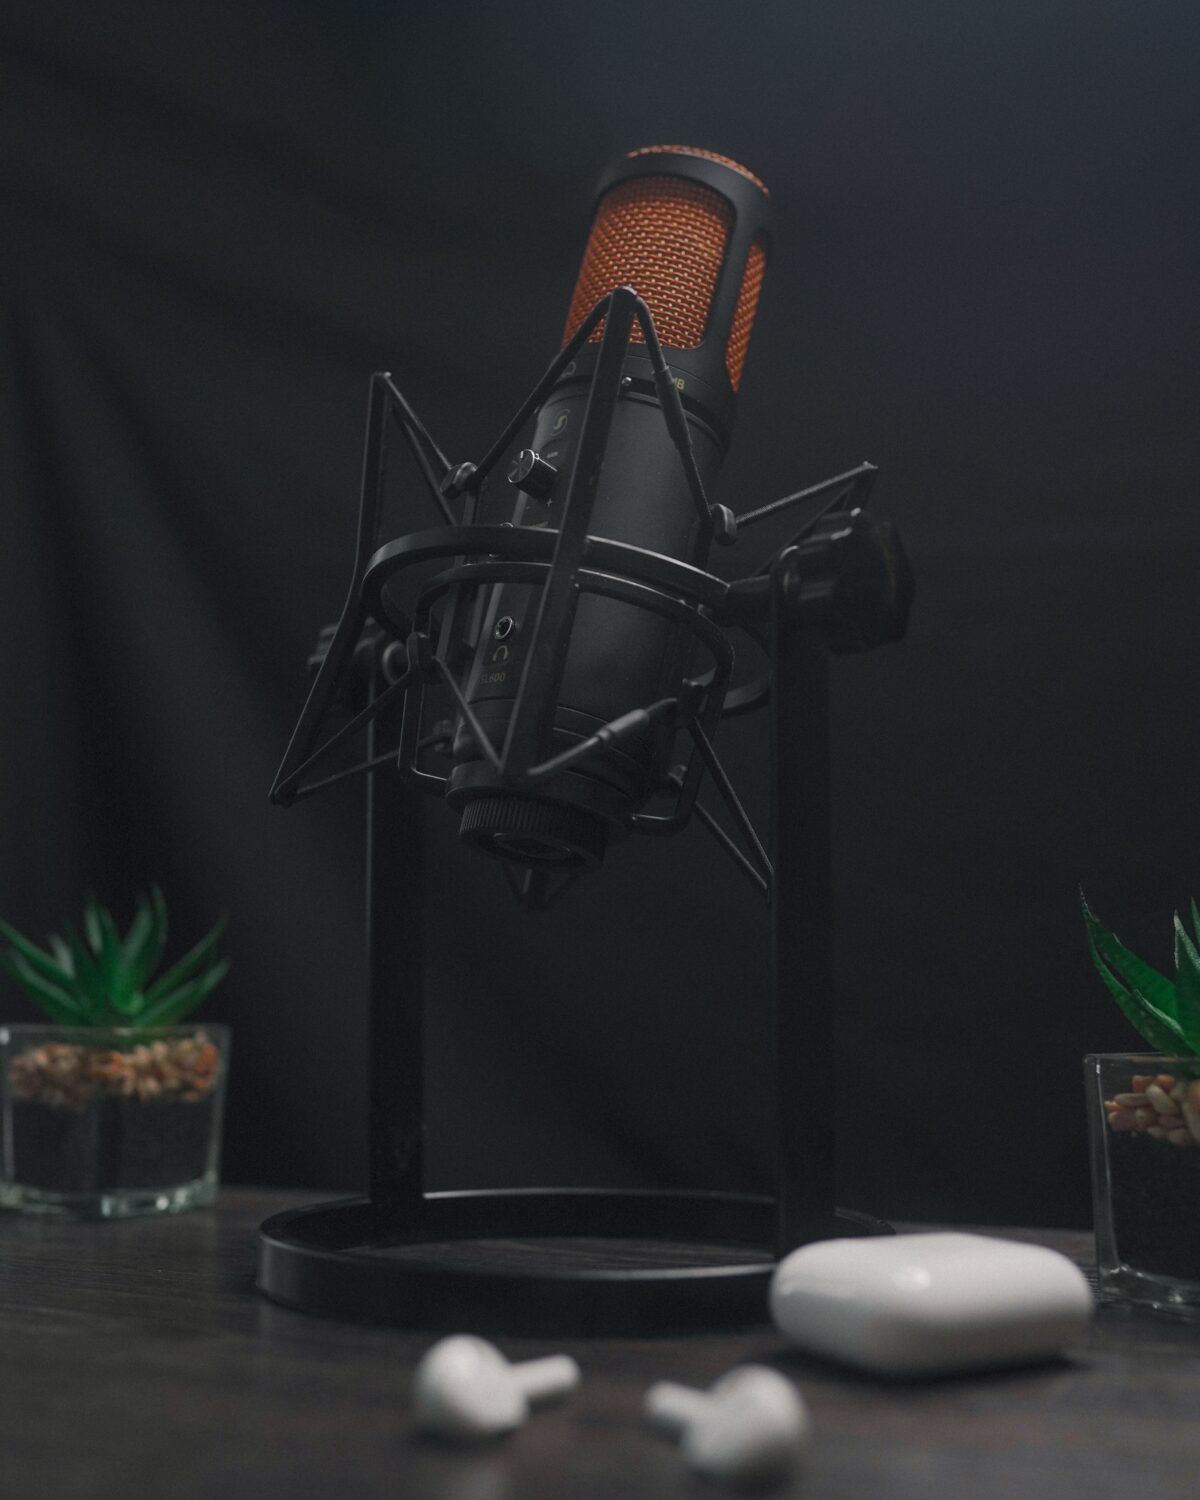 condenser microphones - best kind of mics for film making